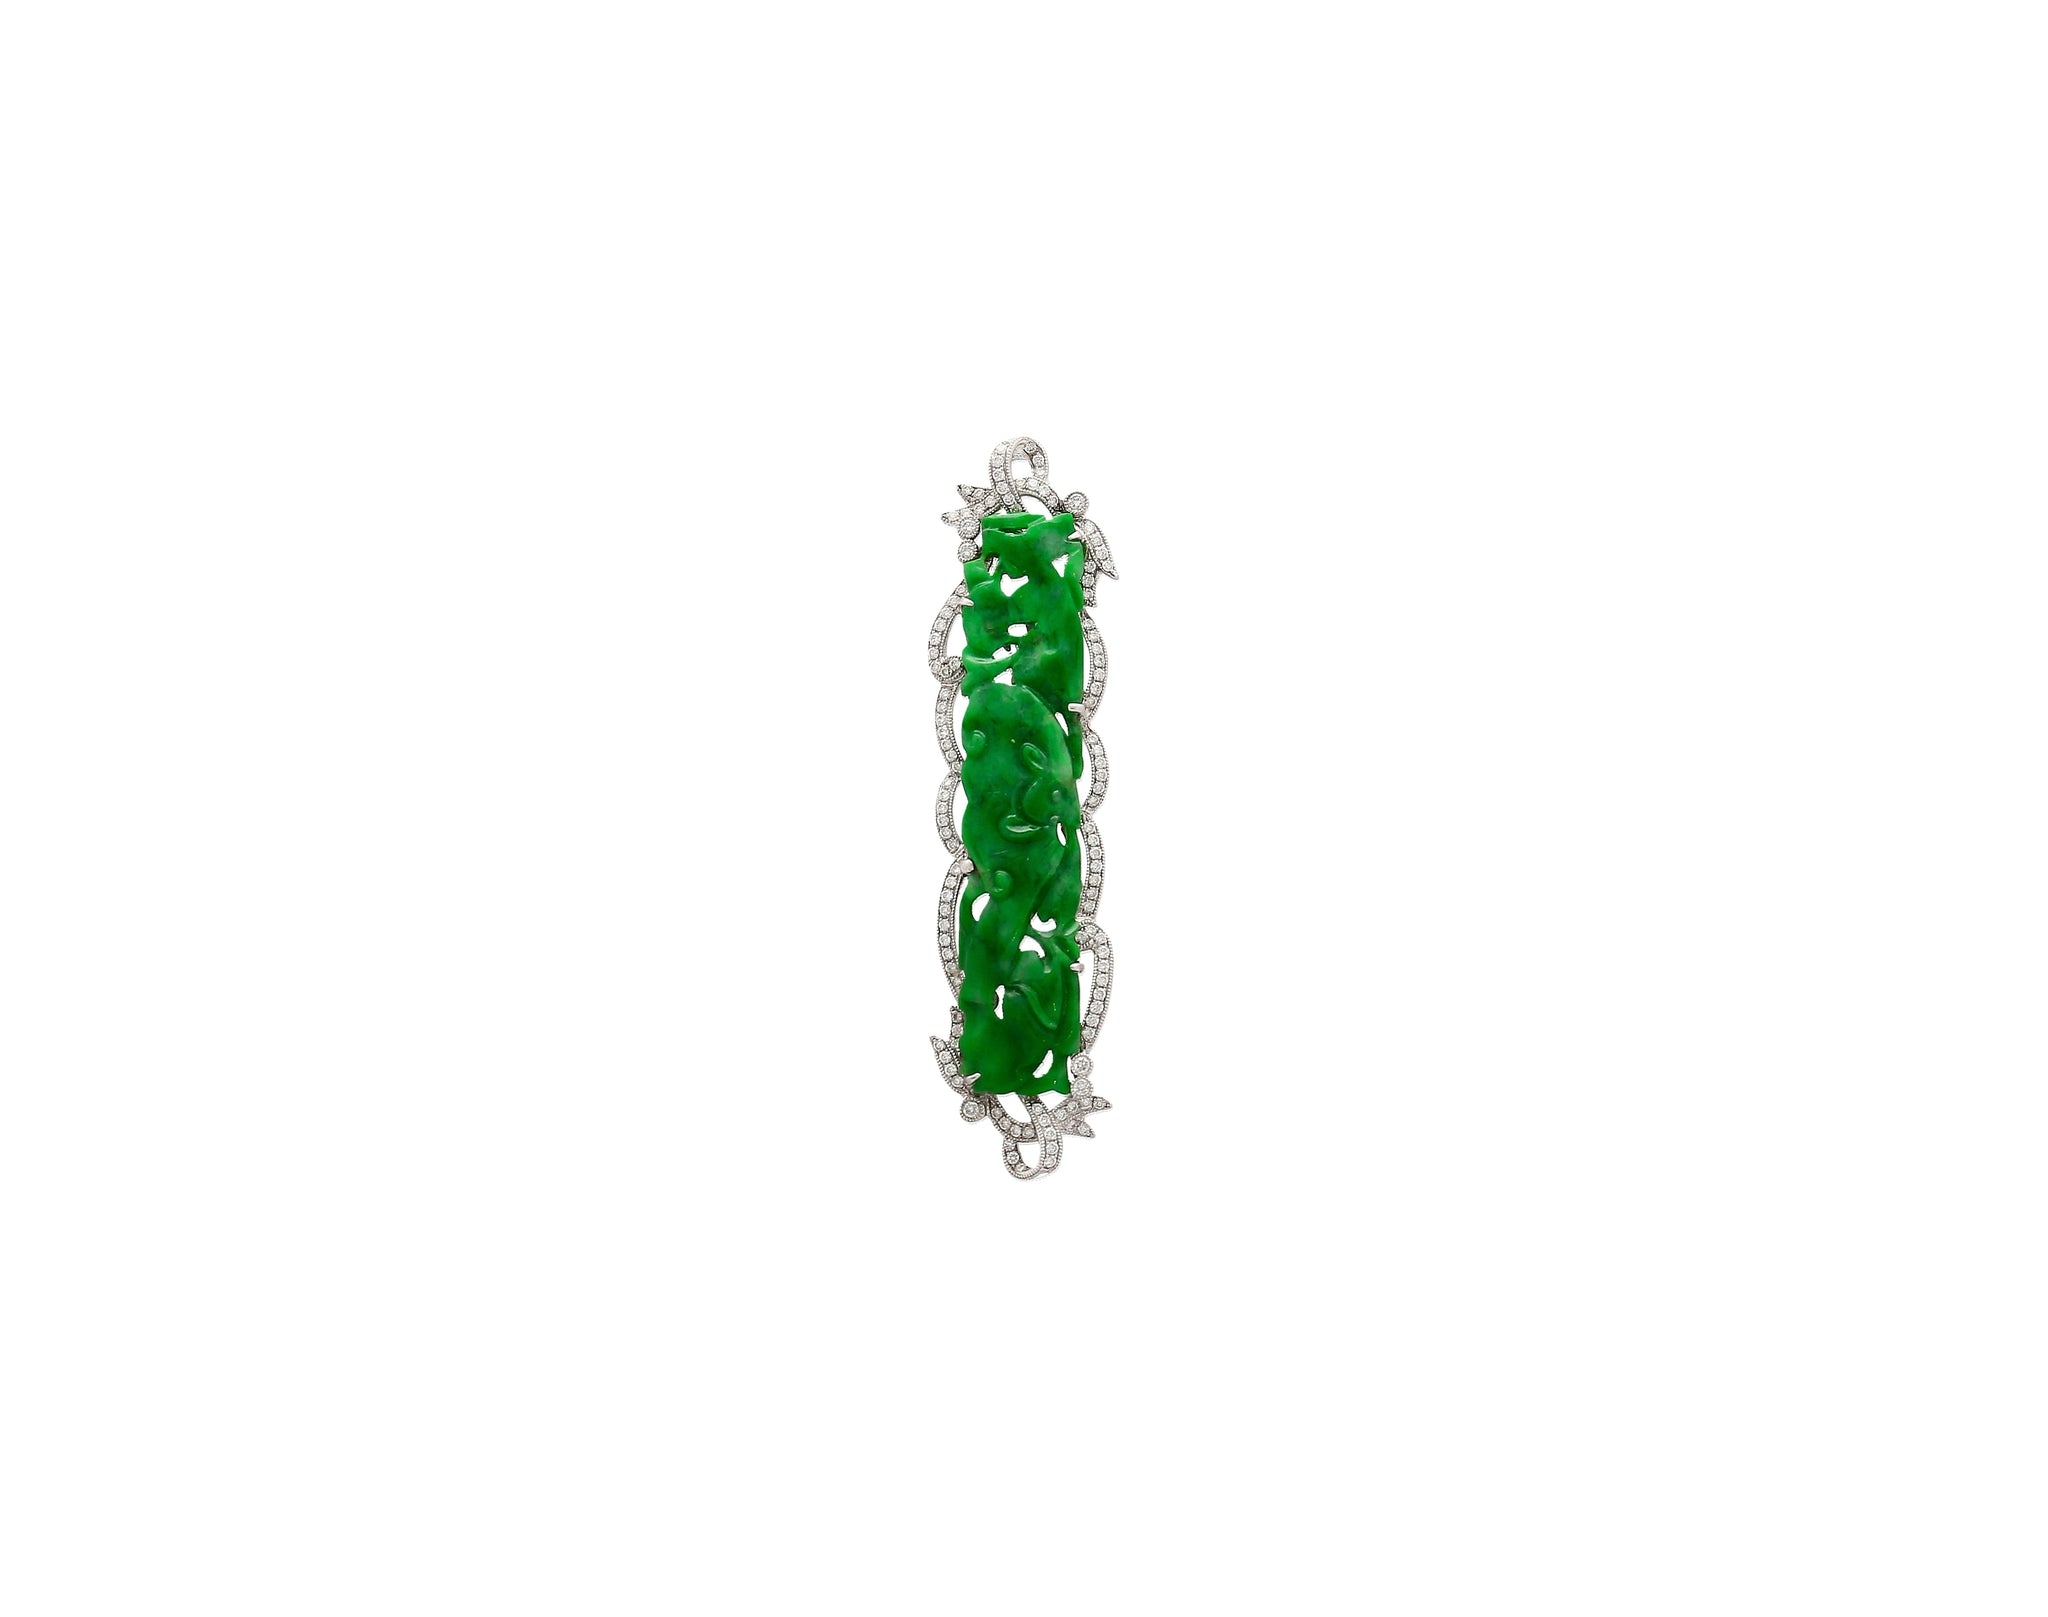 18.20 Carat Carved Dragon Green Jadeite Jade Grade "A" & Diamonds Pendant & Pin Crossover